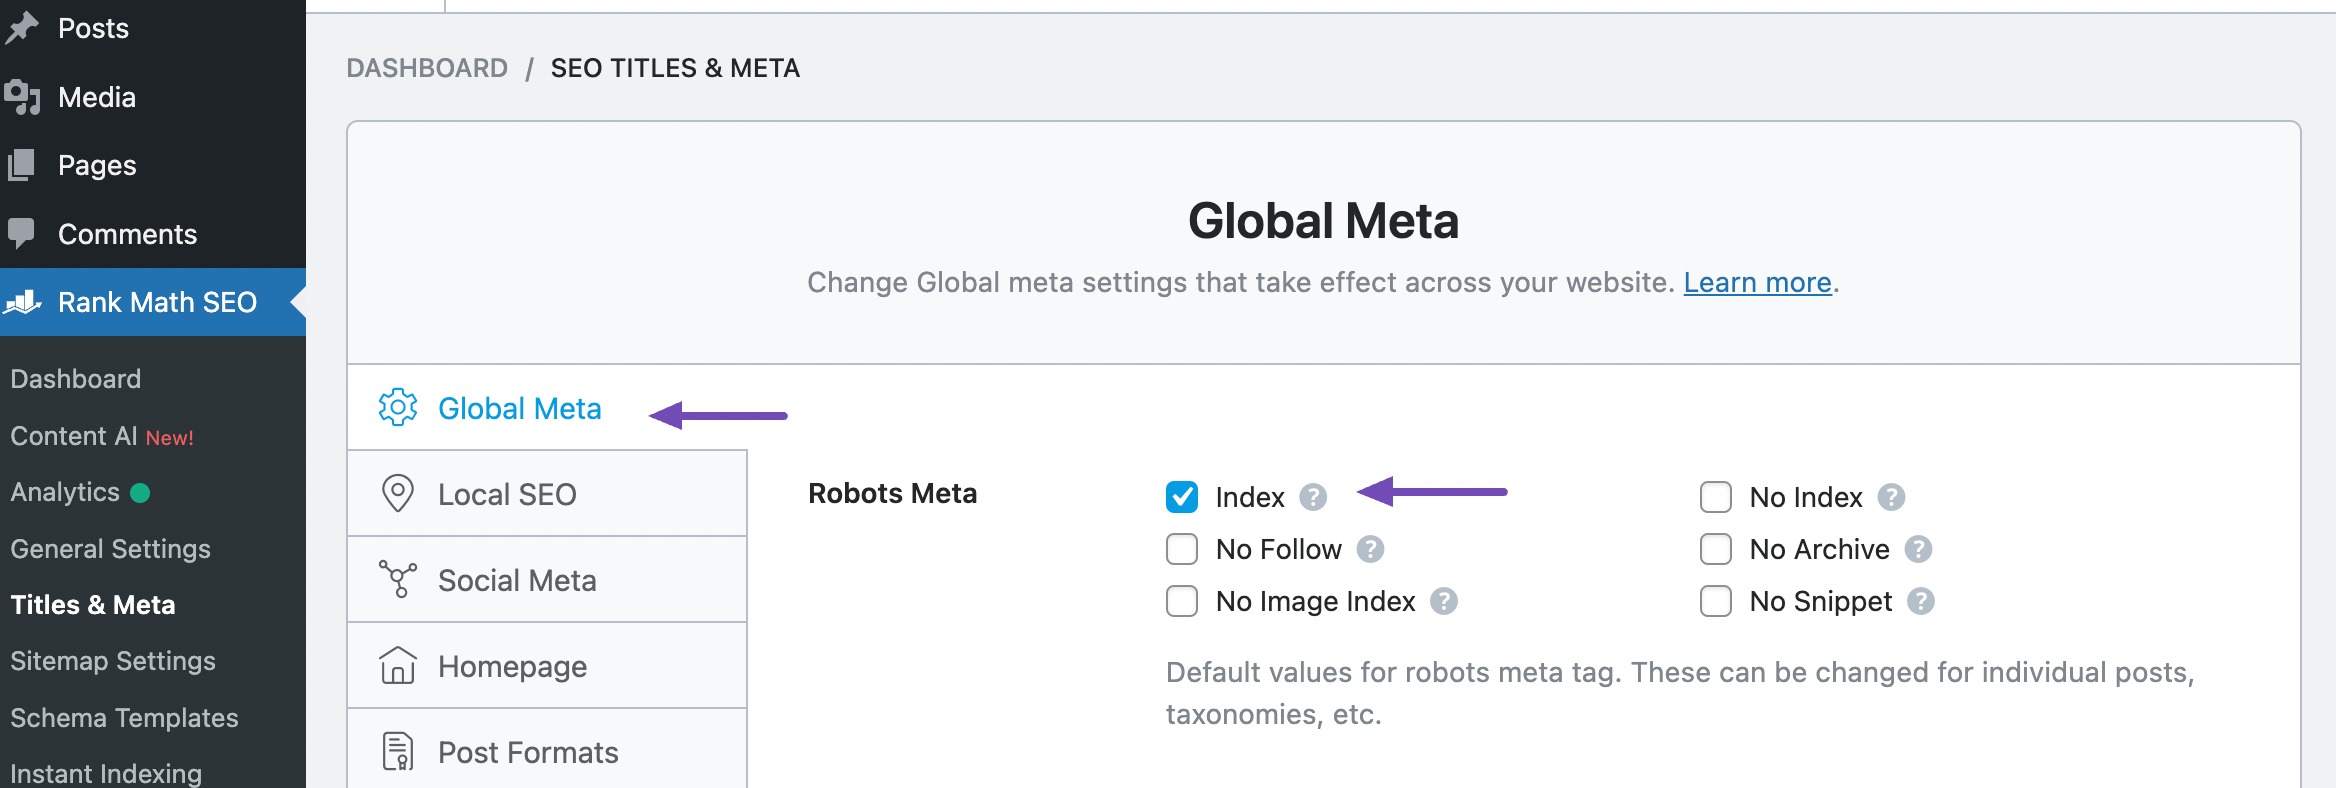 Global Meta set to index